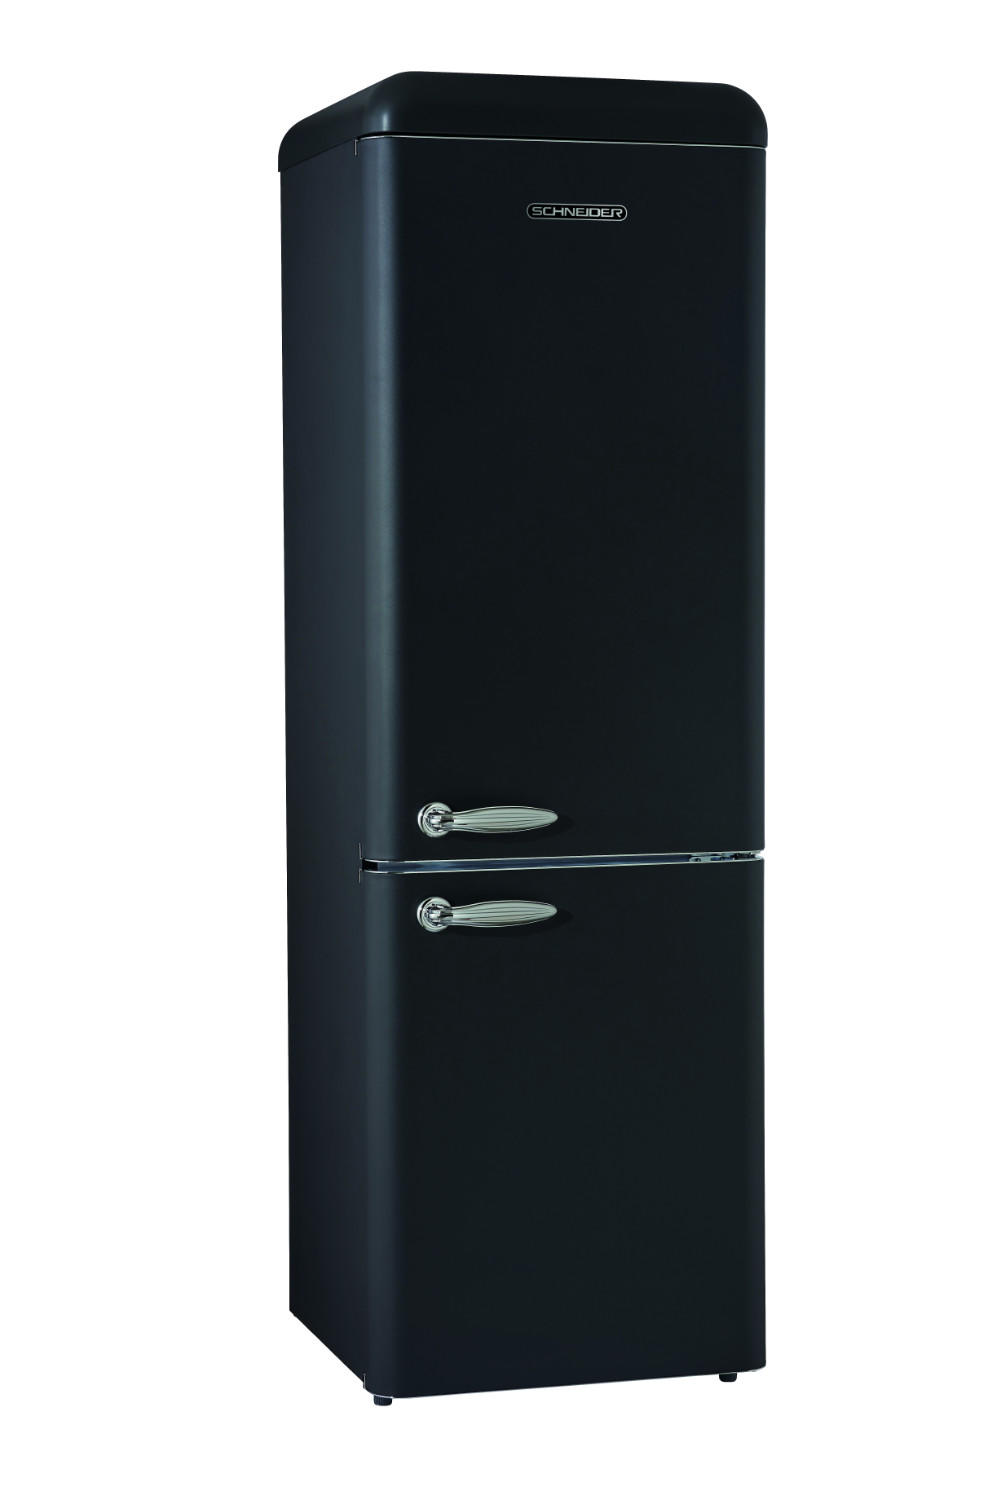 Vintage refrigerator combo in black - SCB300VB - Schneider